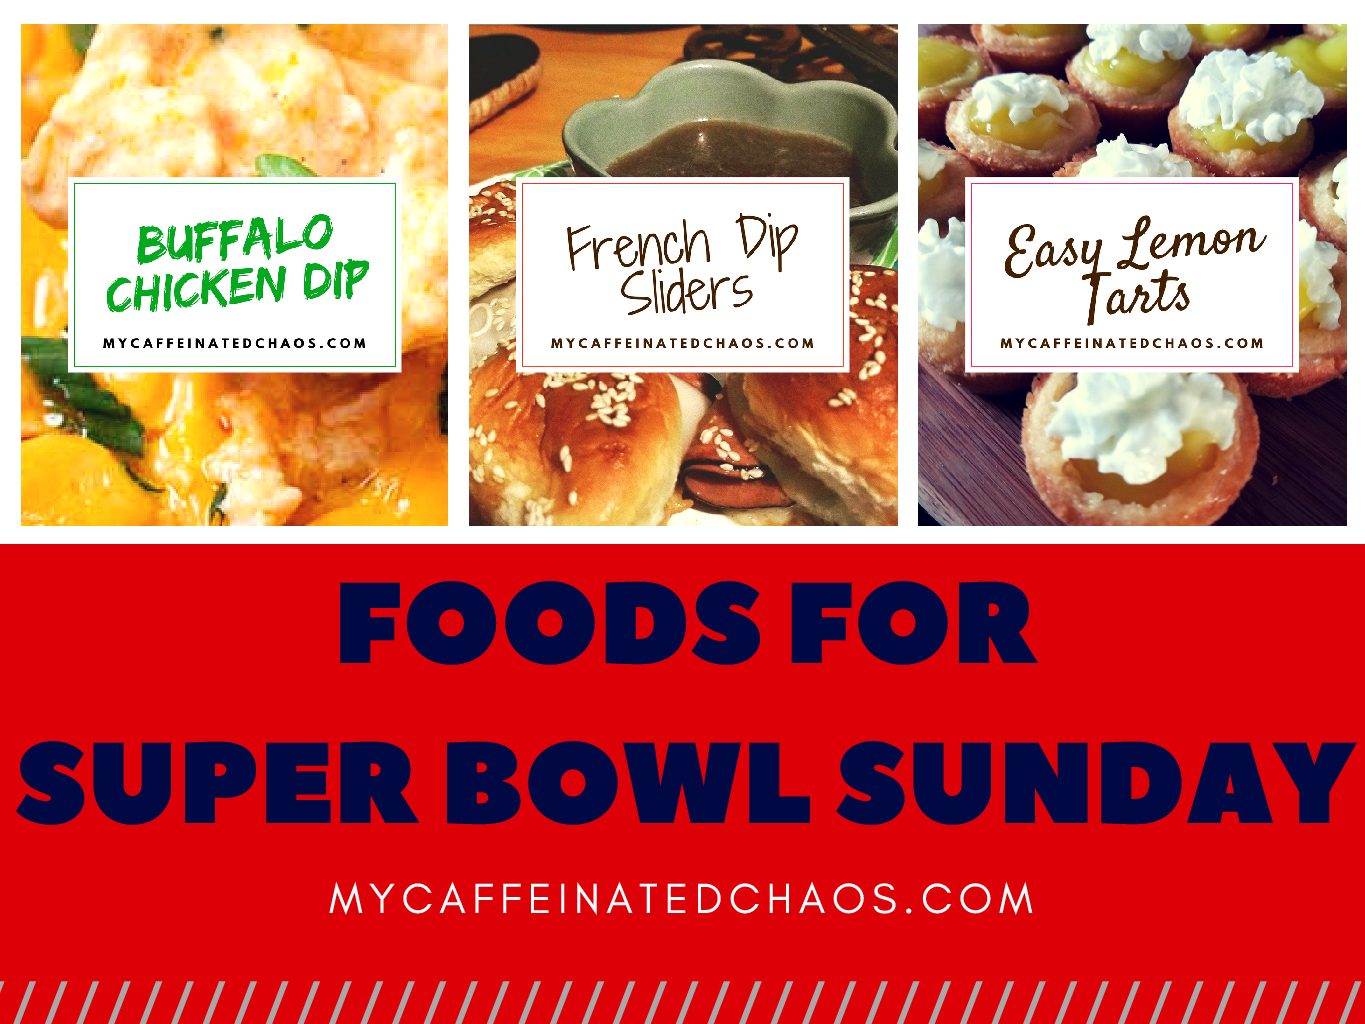 5 Foods for Super Bowl Sunday